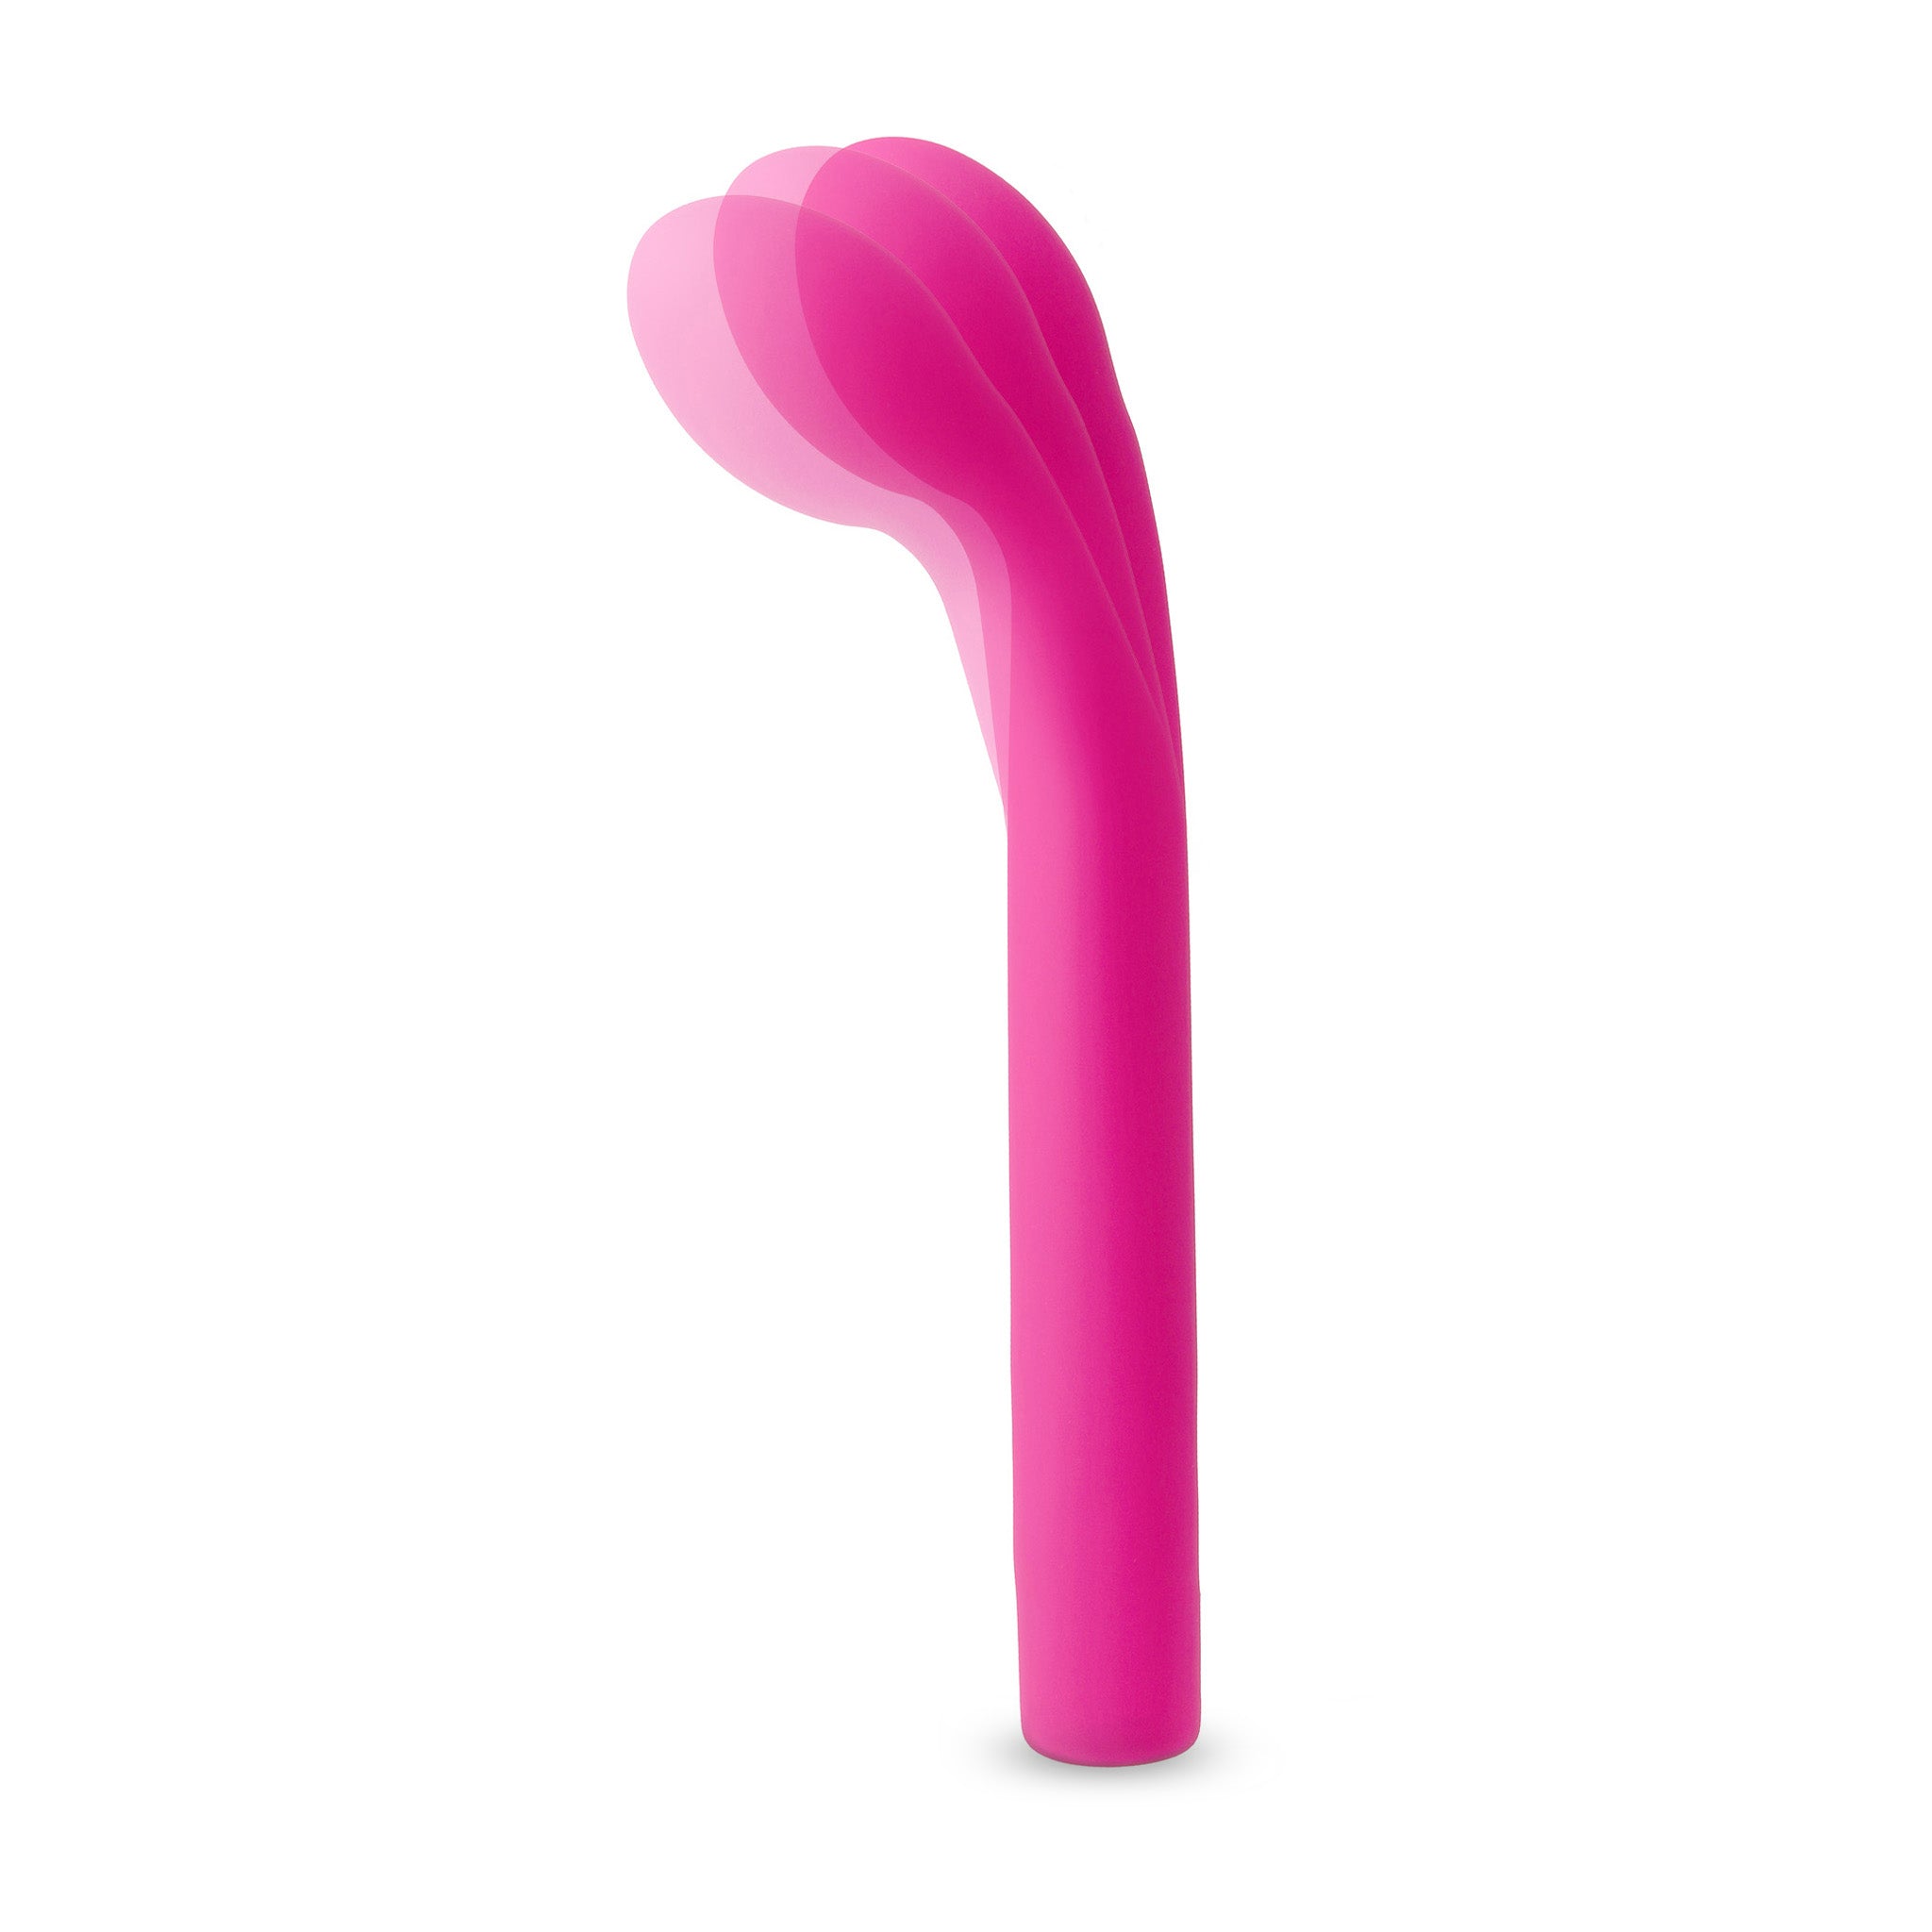 Soft Silicone Bendable G-spot Vibrator Massager Stimulator Sex Toys for Women